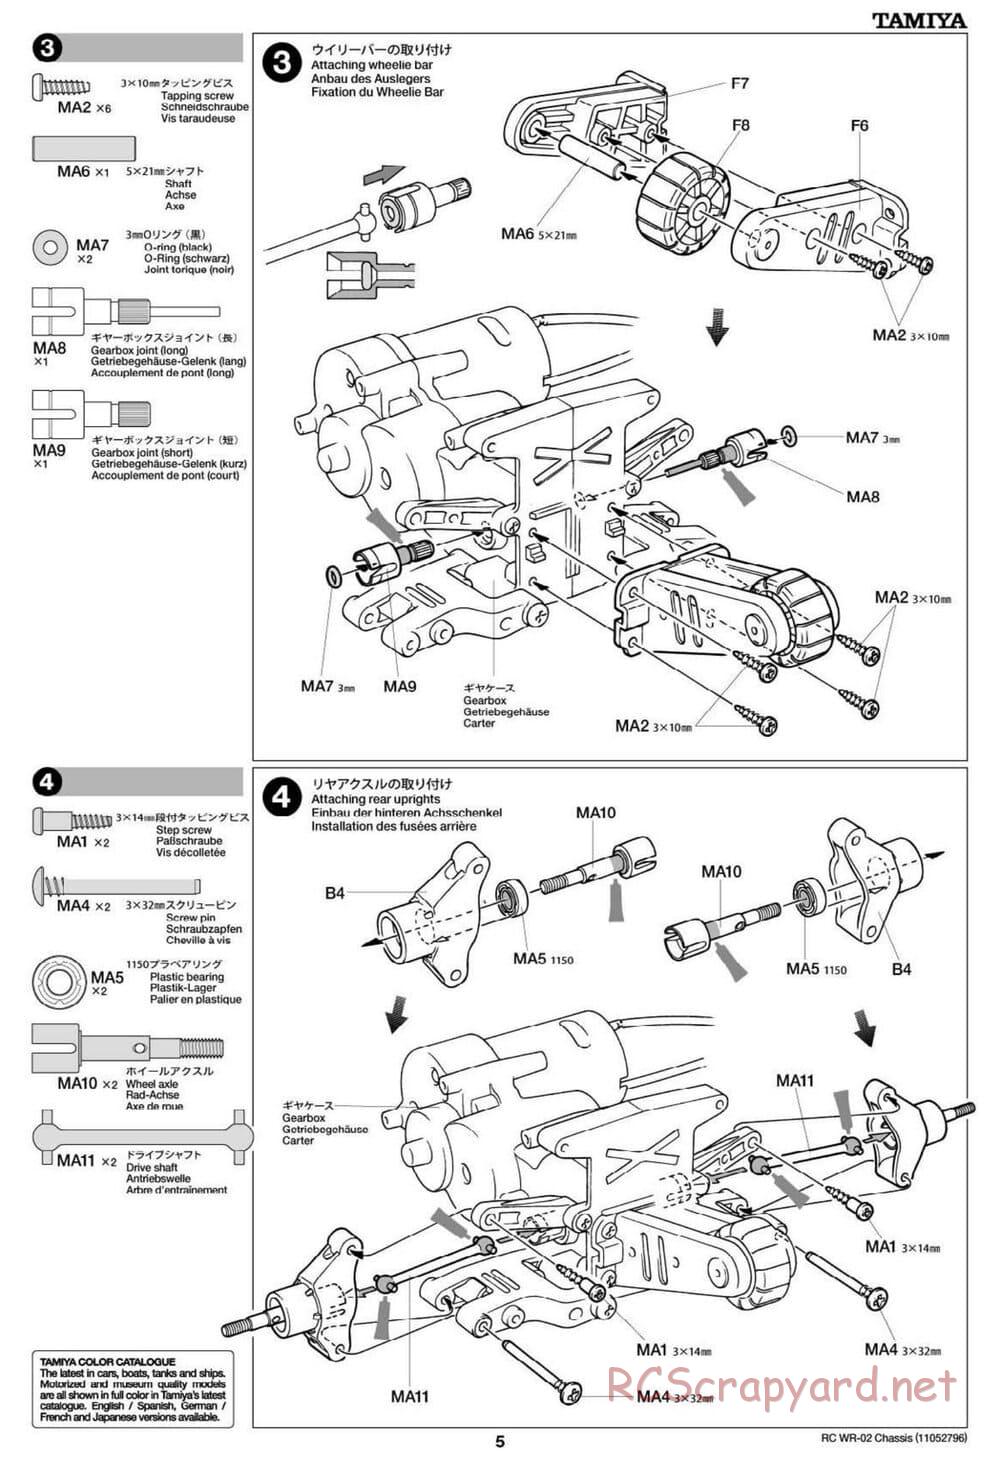 Tamiya - WR-02 Chassis - Manual - Page 5